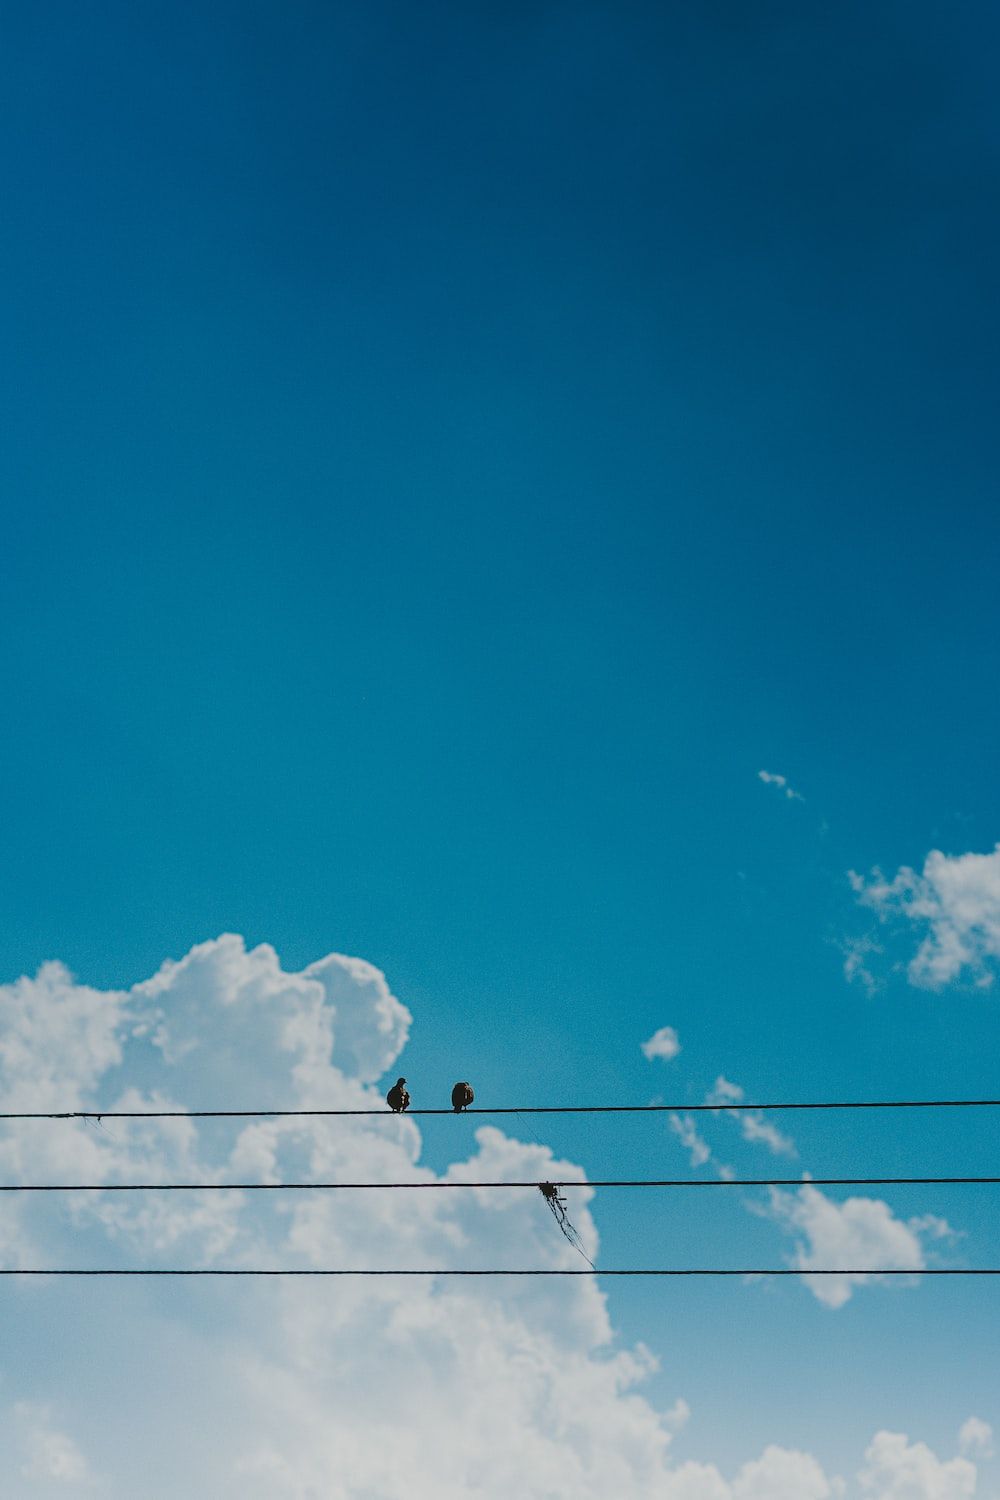 Two birds on a black wire under blue sky - Light blue, pastel blue